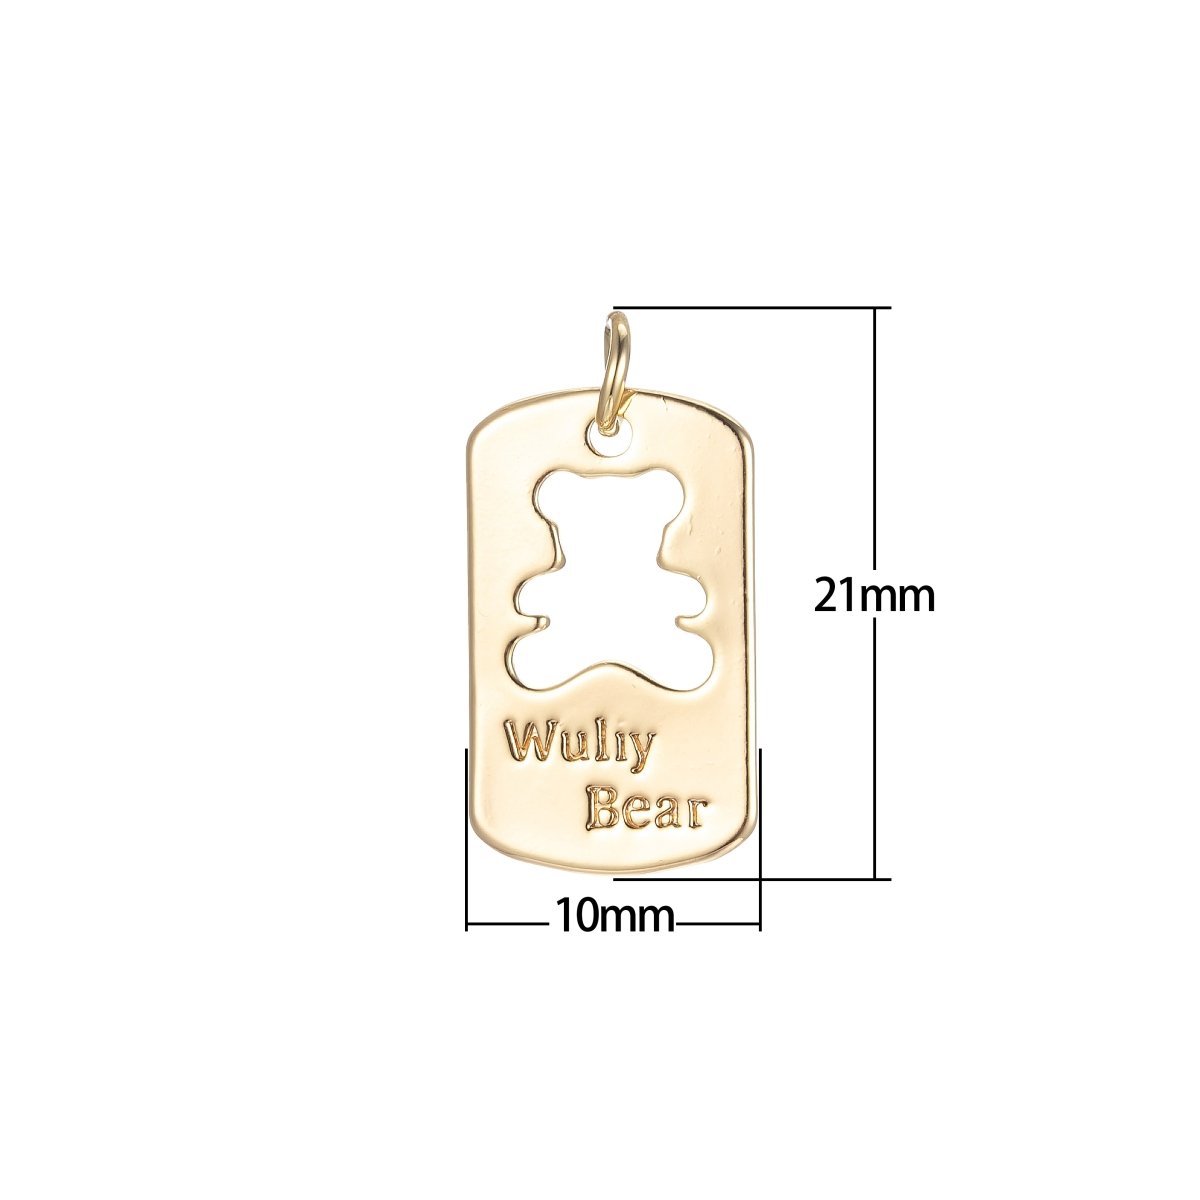 Tag Gold Bear Charm Teddy Bear Charm Necklace Pendant / Bracelet / Earrings / Kids Crafts Jewelry Supply E-865 - DLUXCA